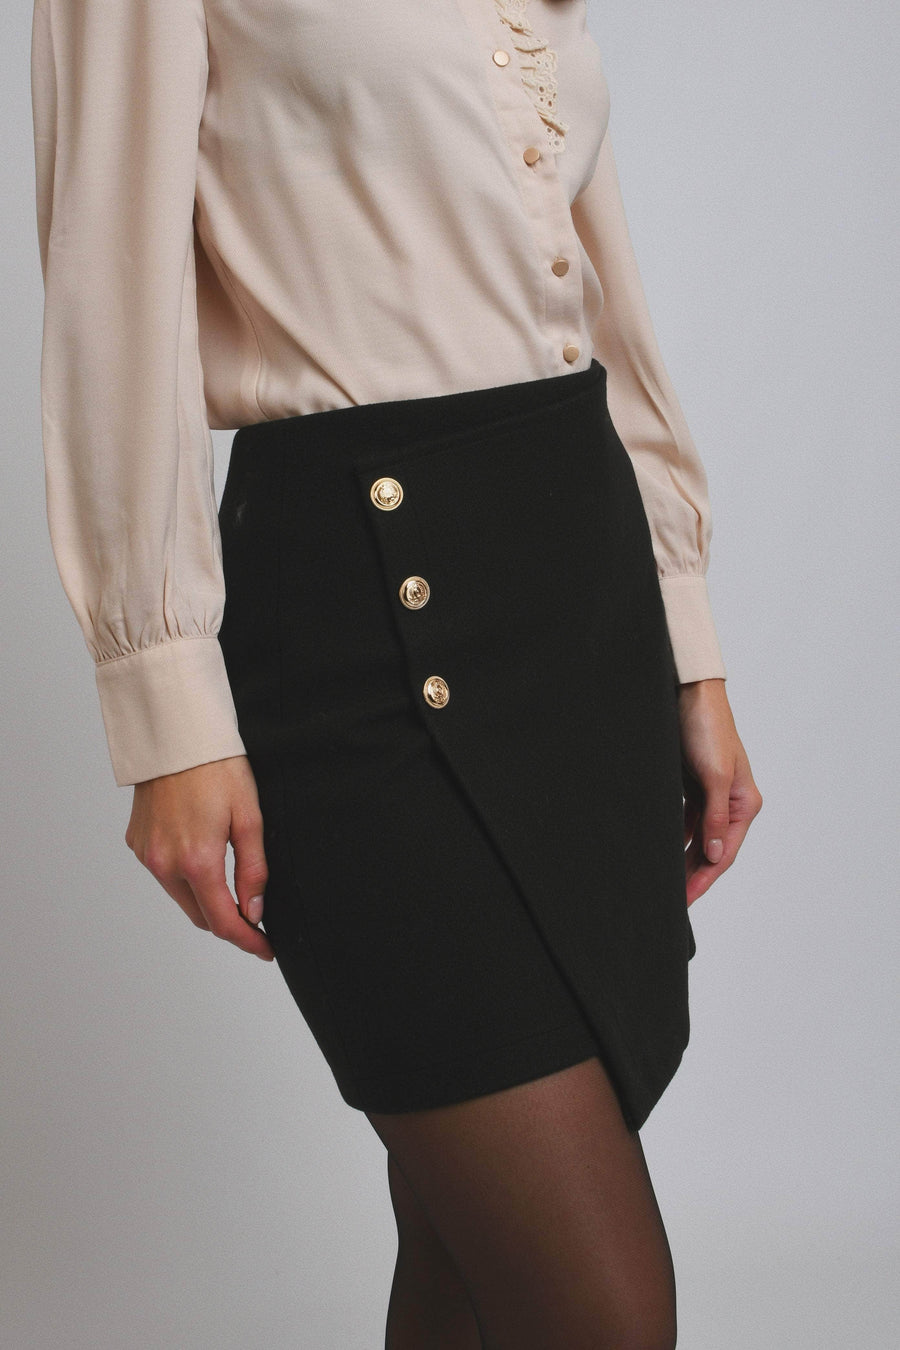 Pacifica skirt ✨